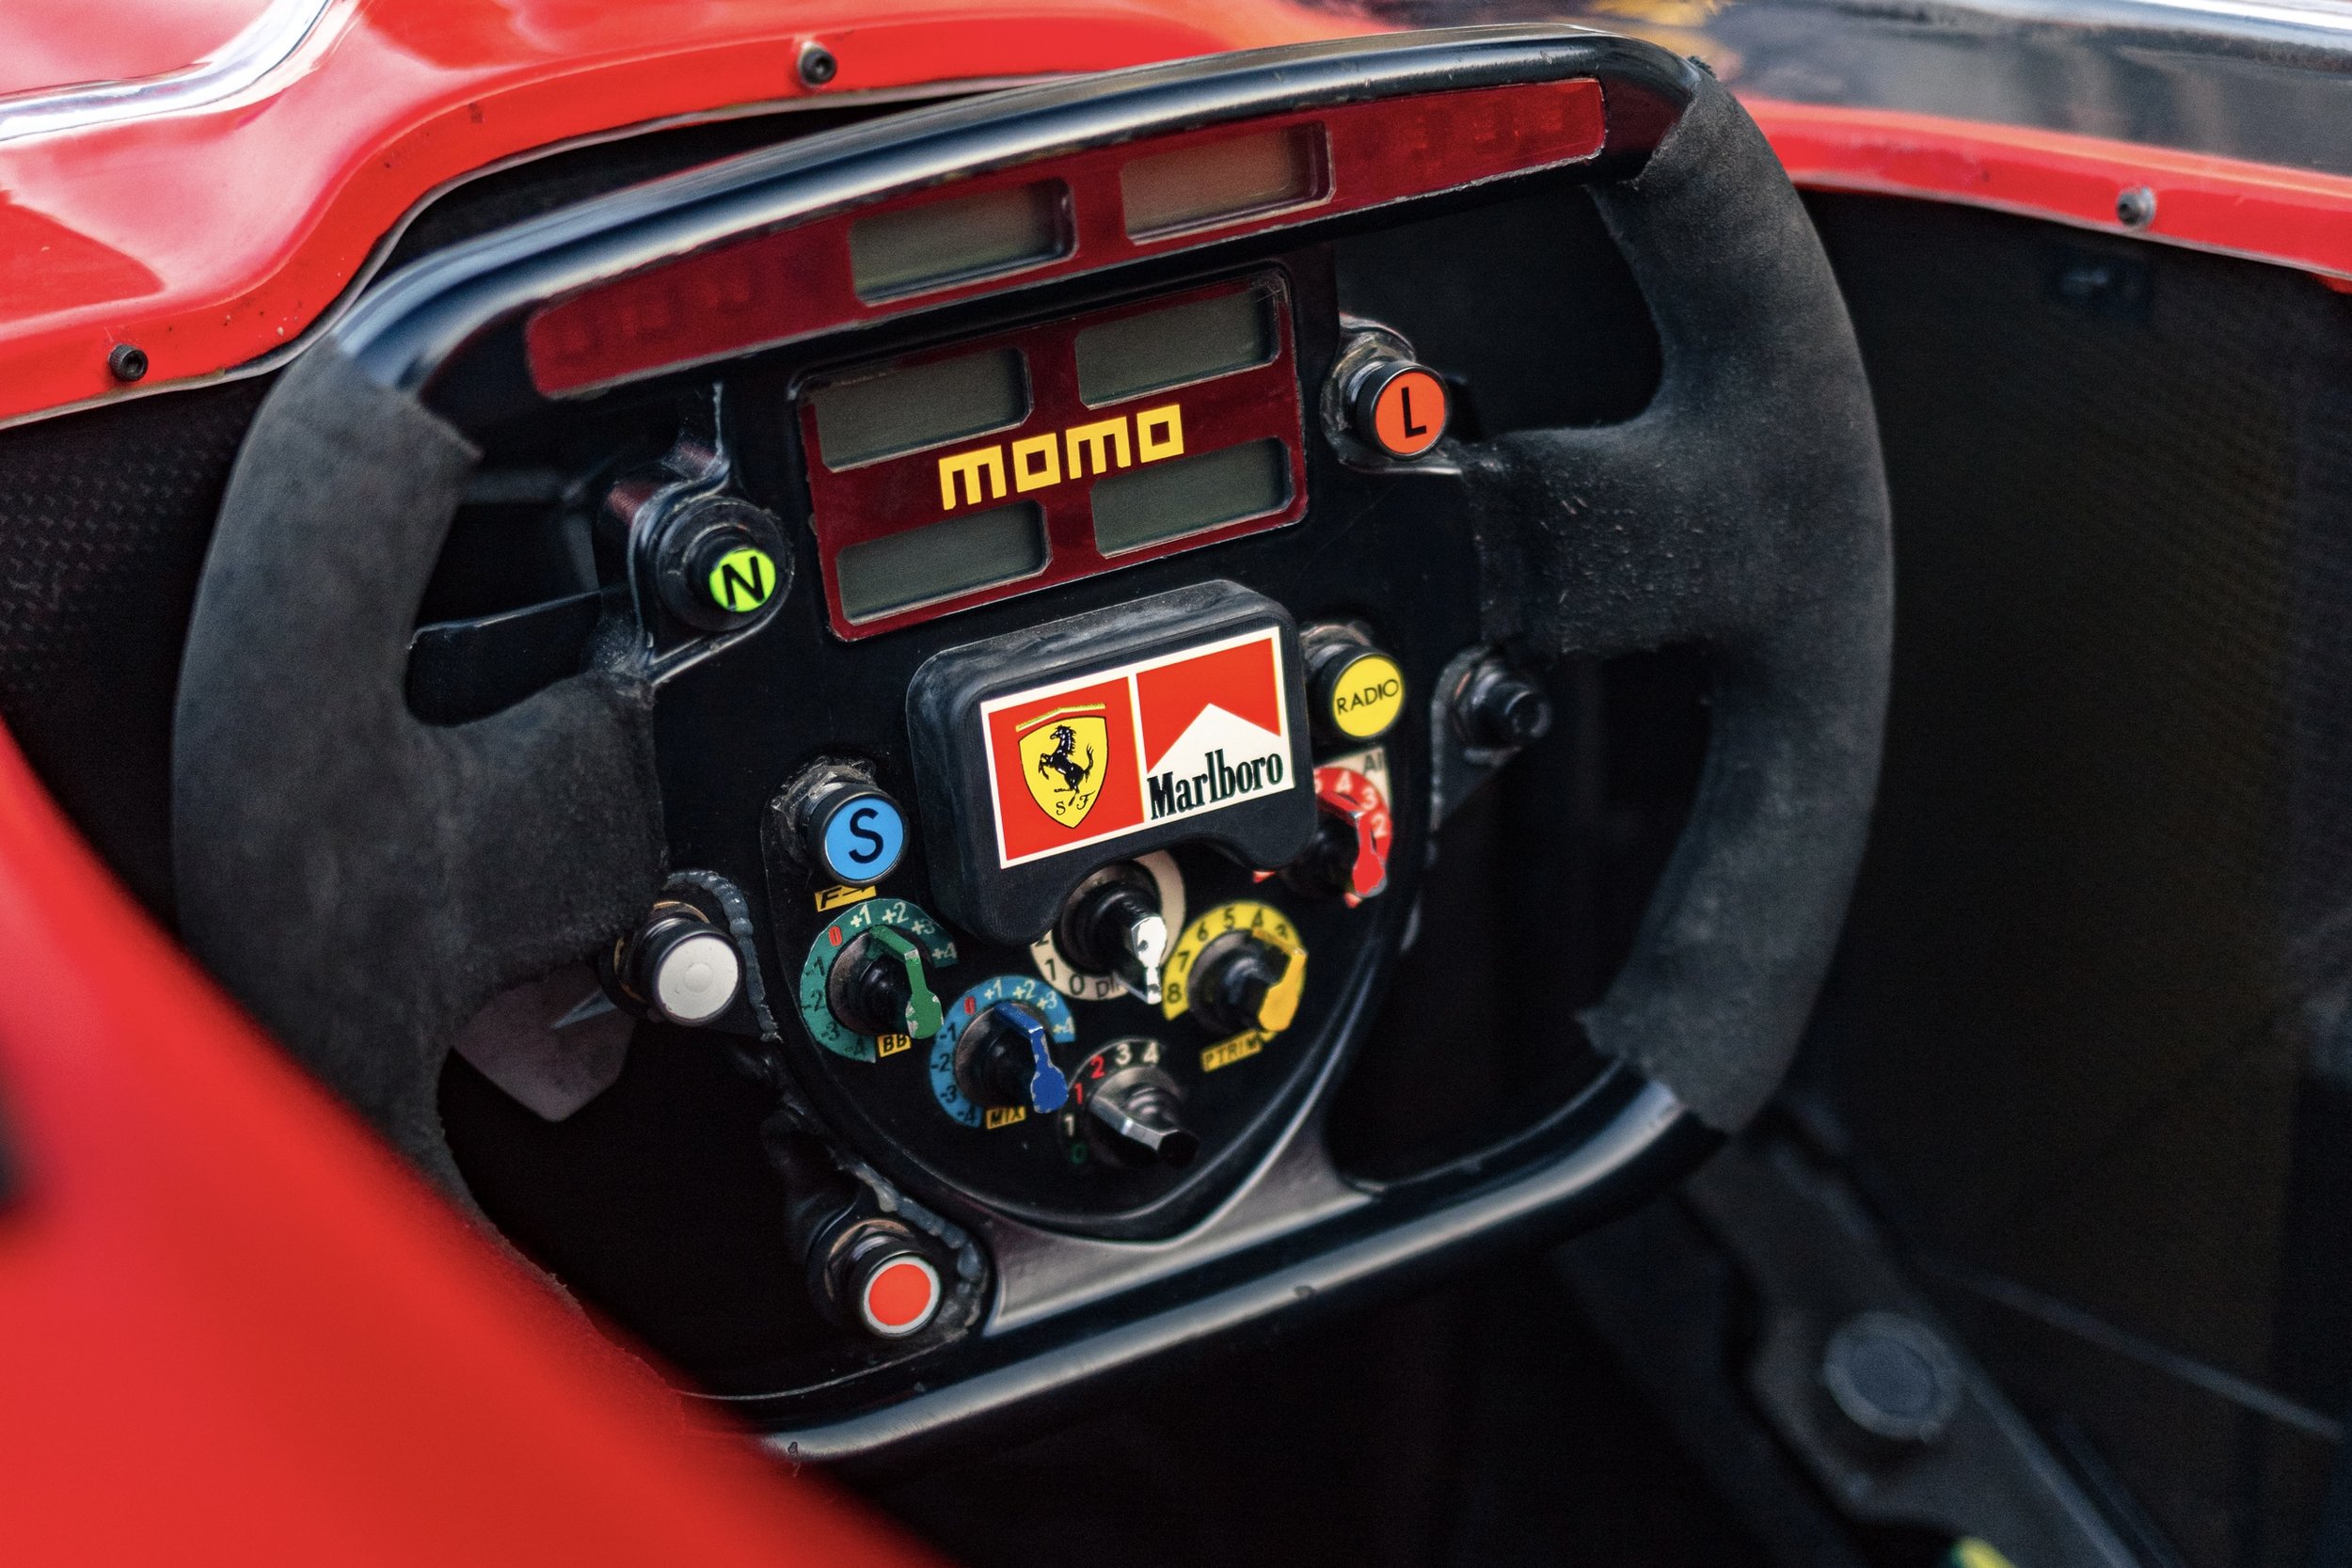 The Ferrari F300